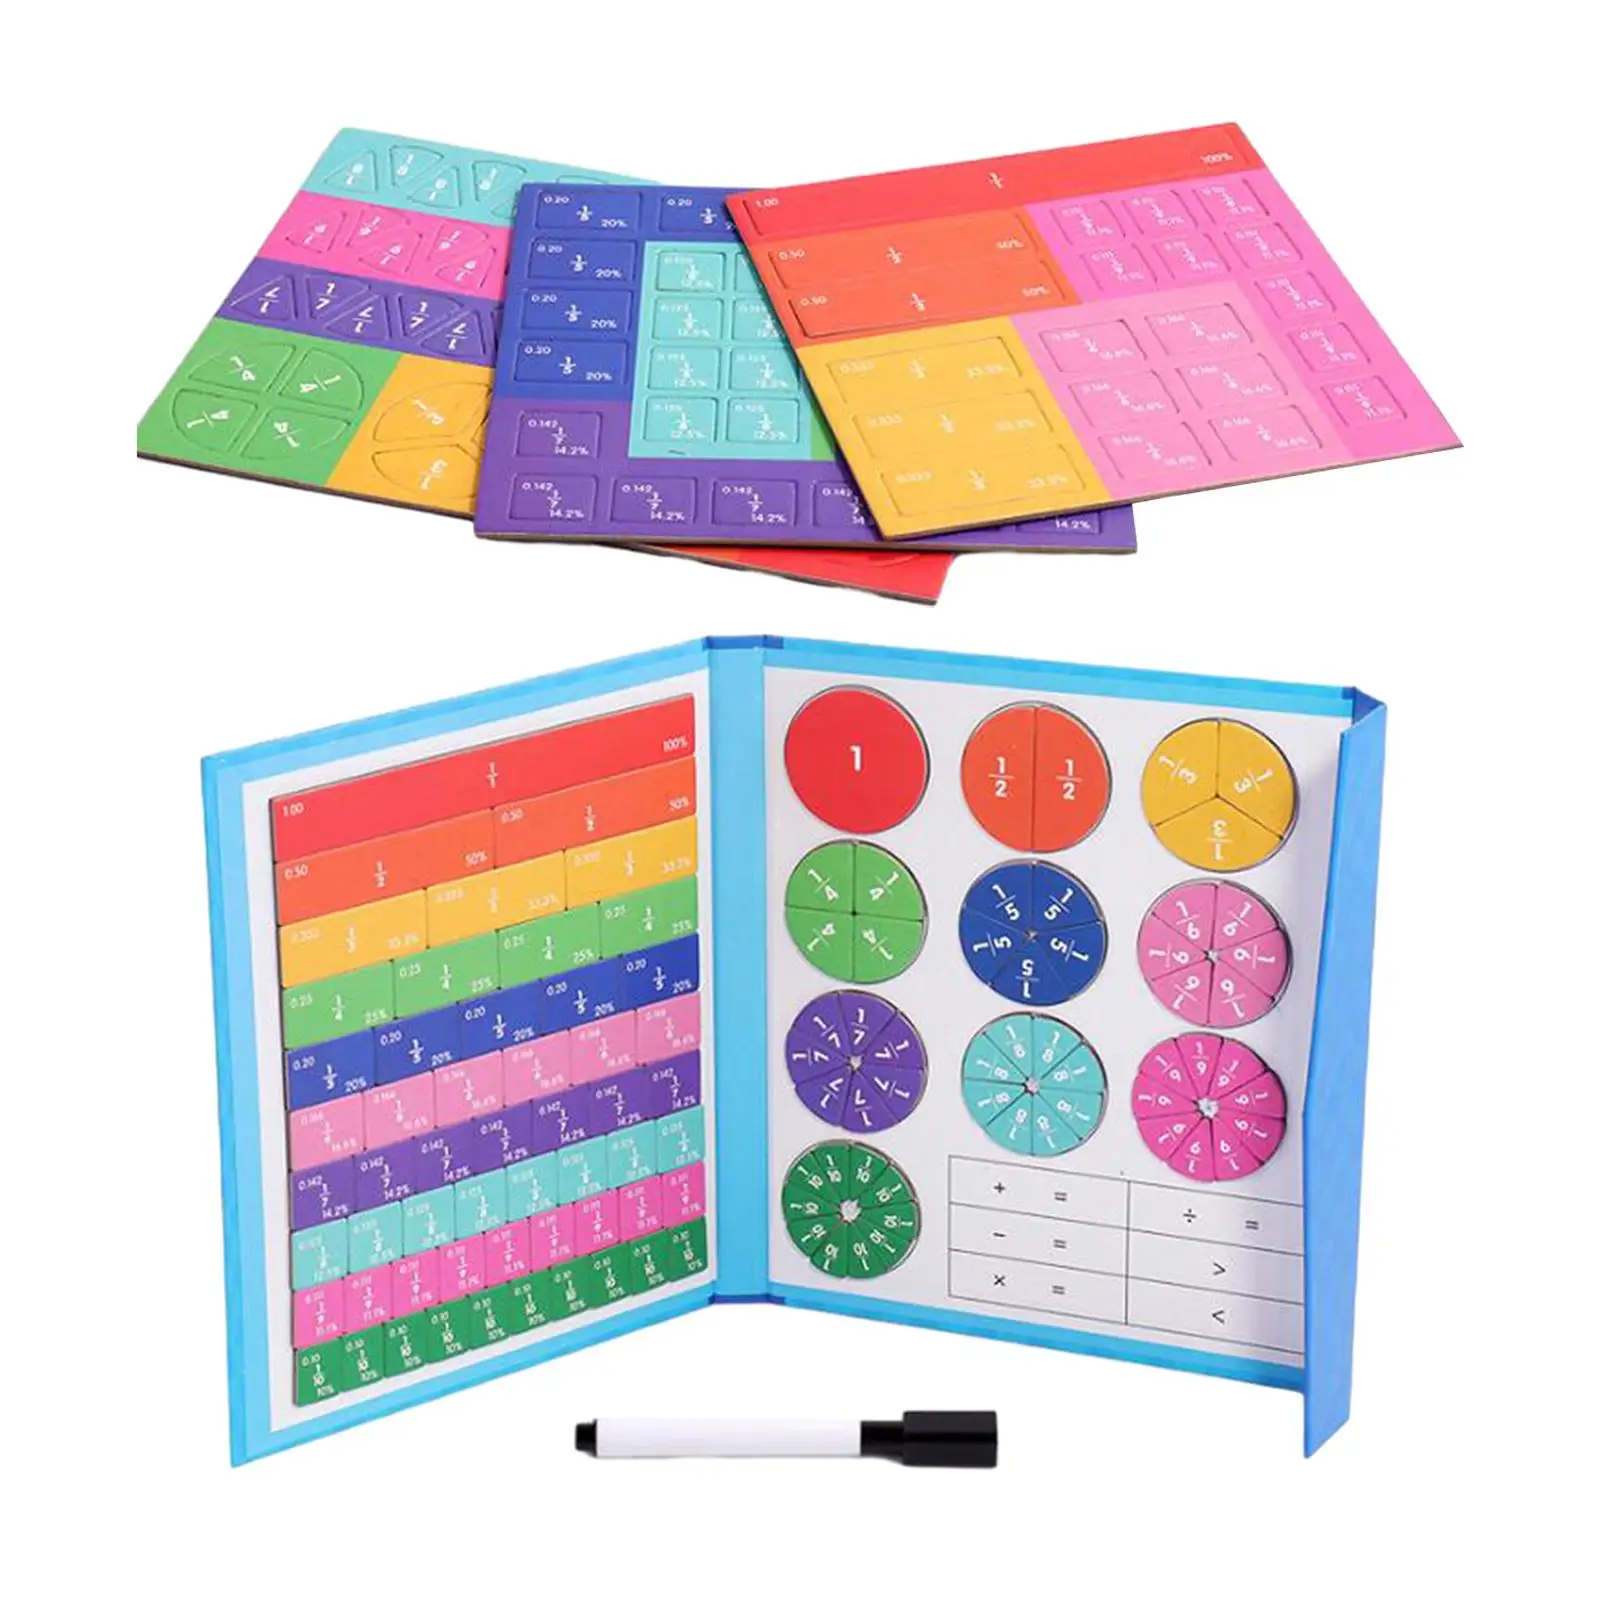 Fraction Learning Math Toys Reuse Multicolor Rainbow Math Teaching Tools Fraction Teaching Aids for Living Room Gift Children